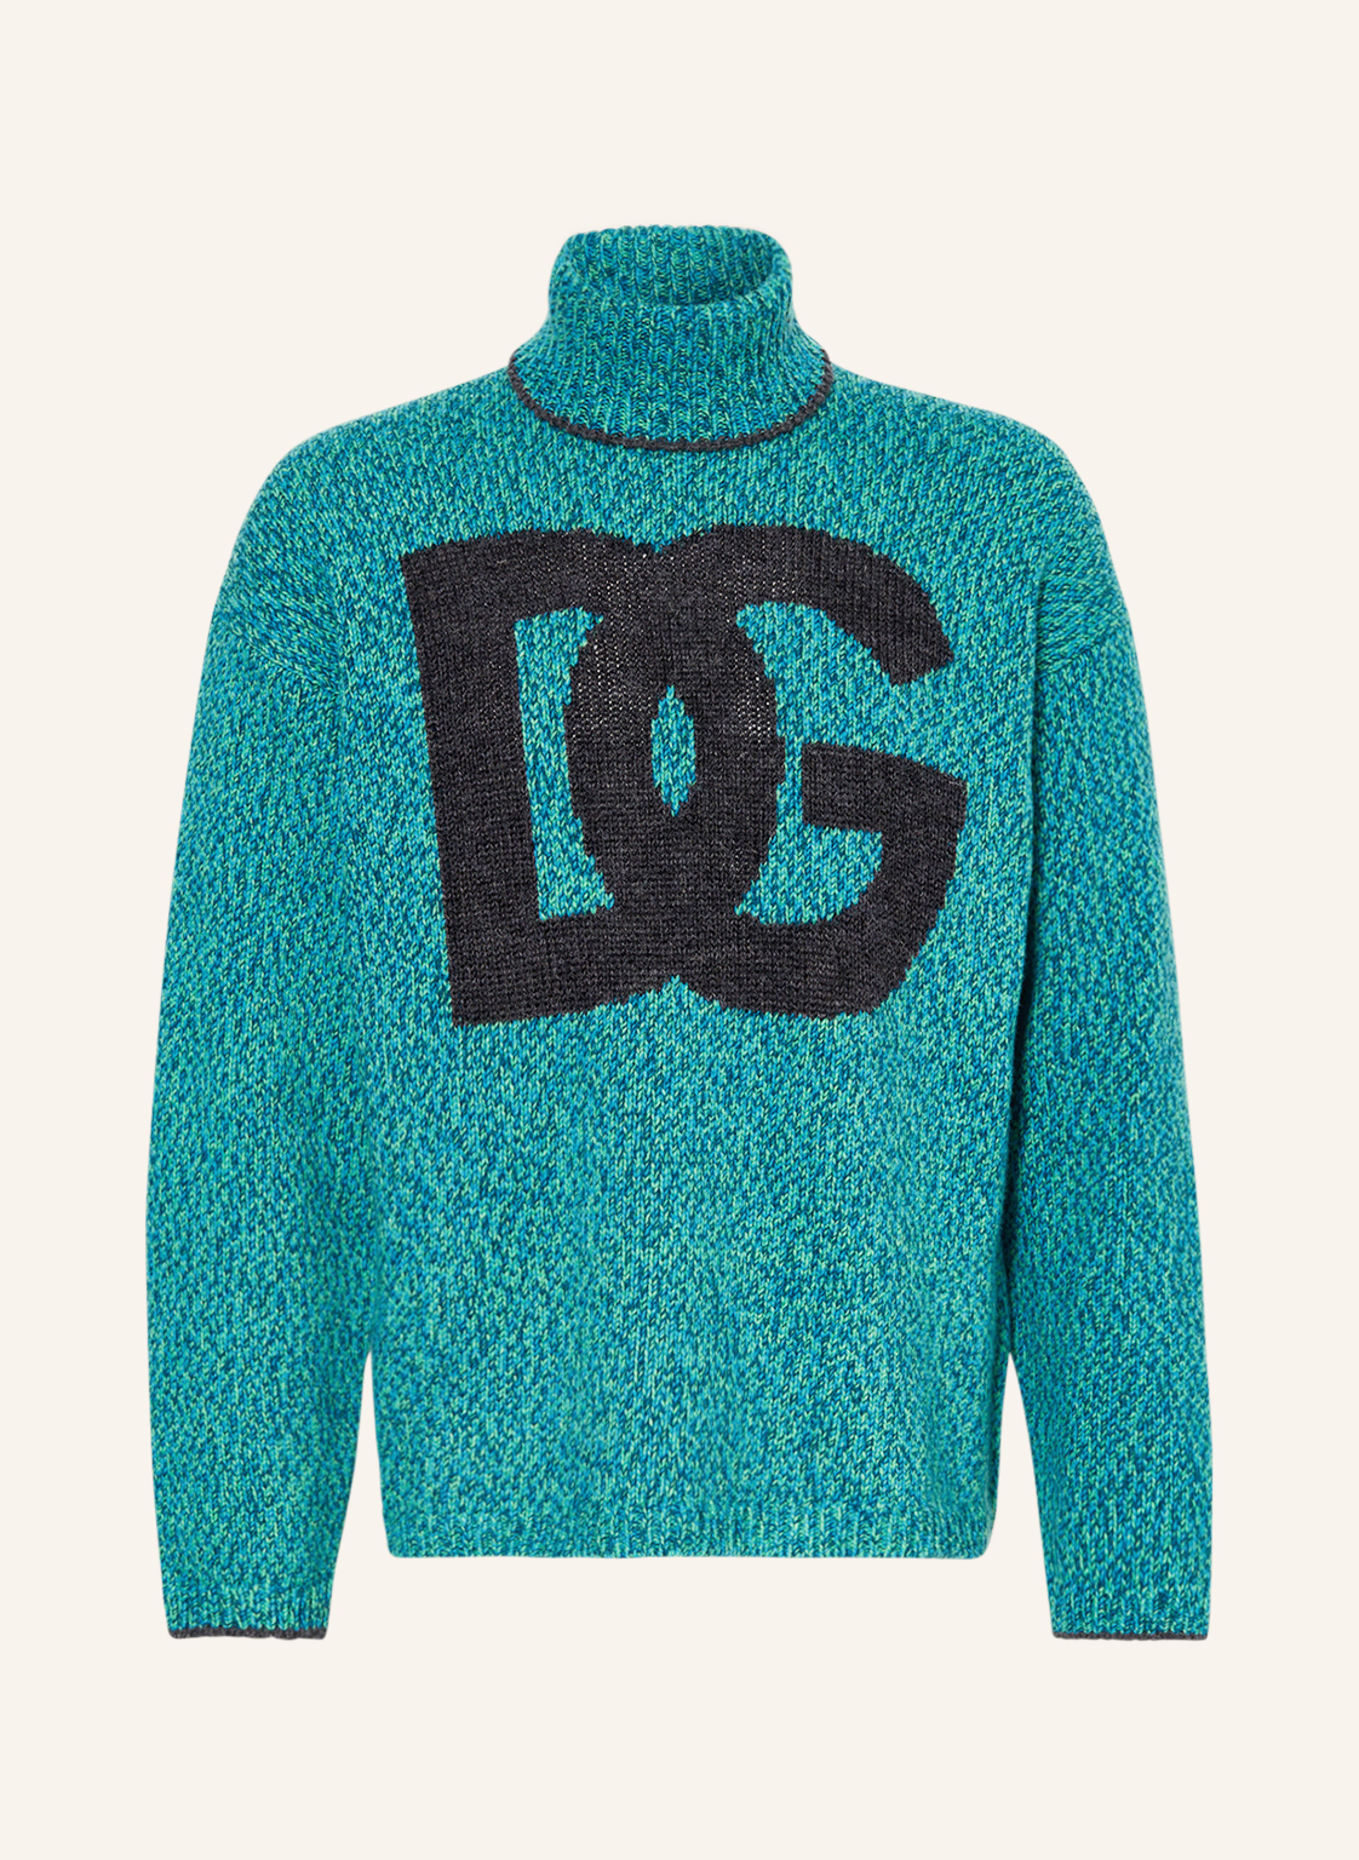 DOLCE & GABBANA Turtleneck sweater in blue/ turquoise/ light green